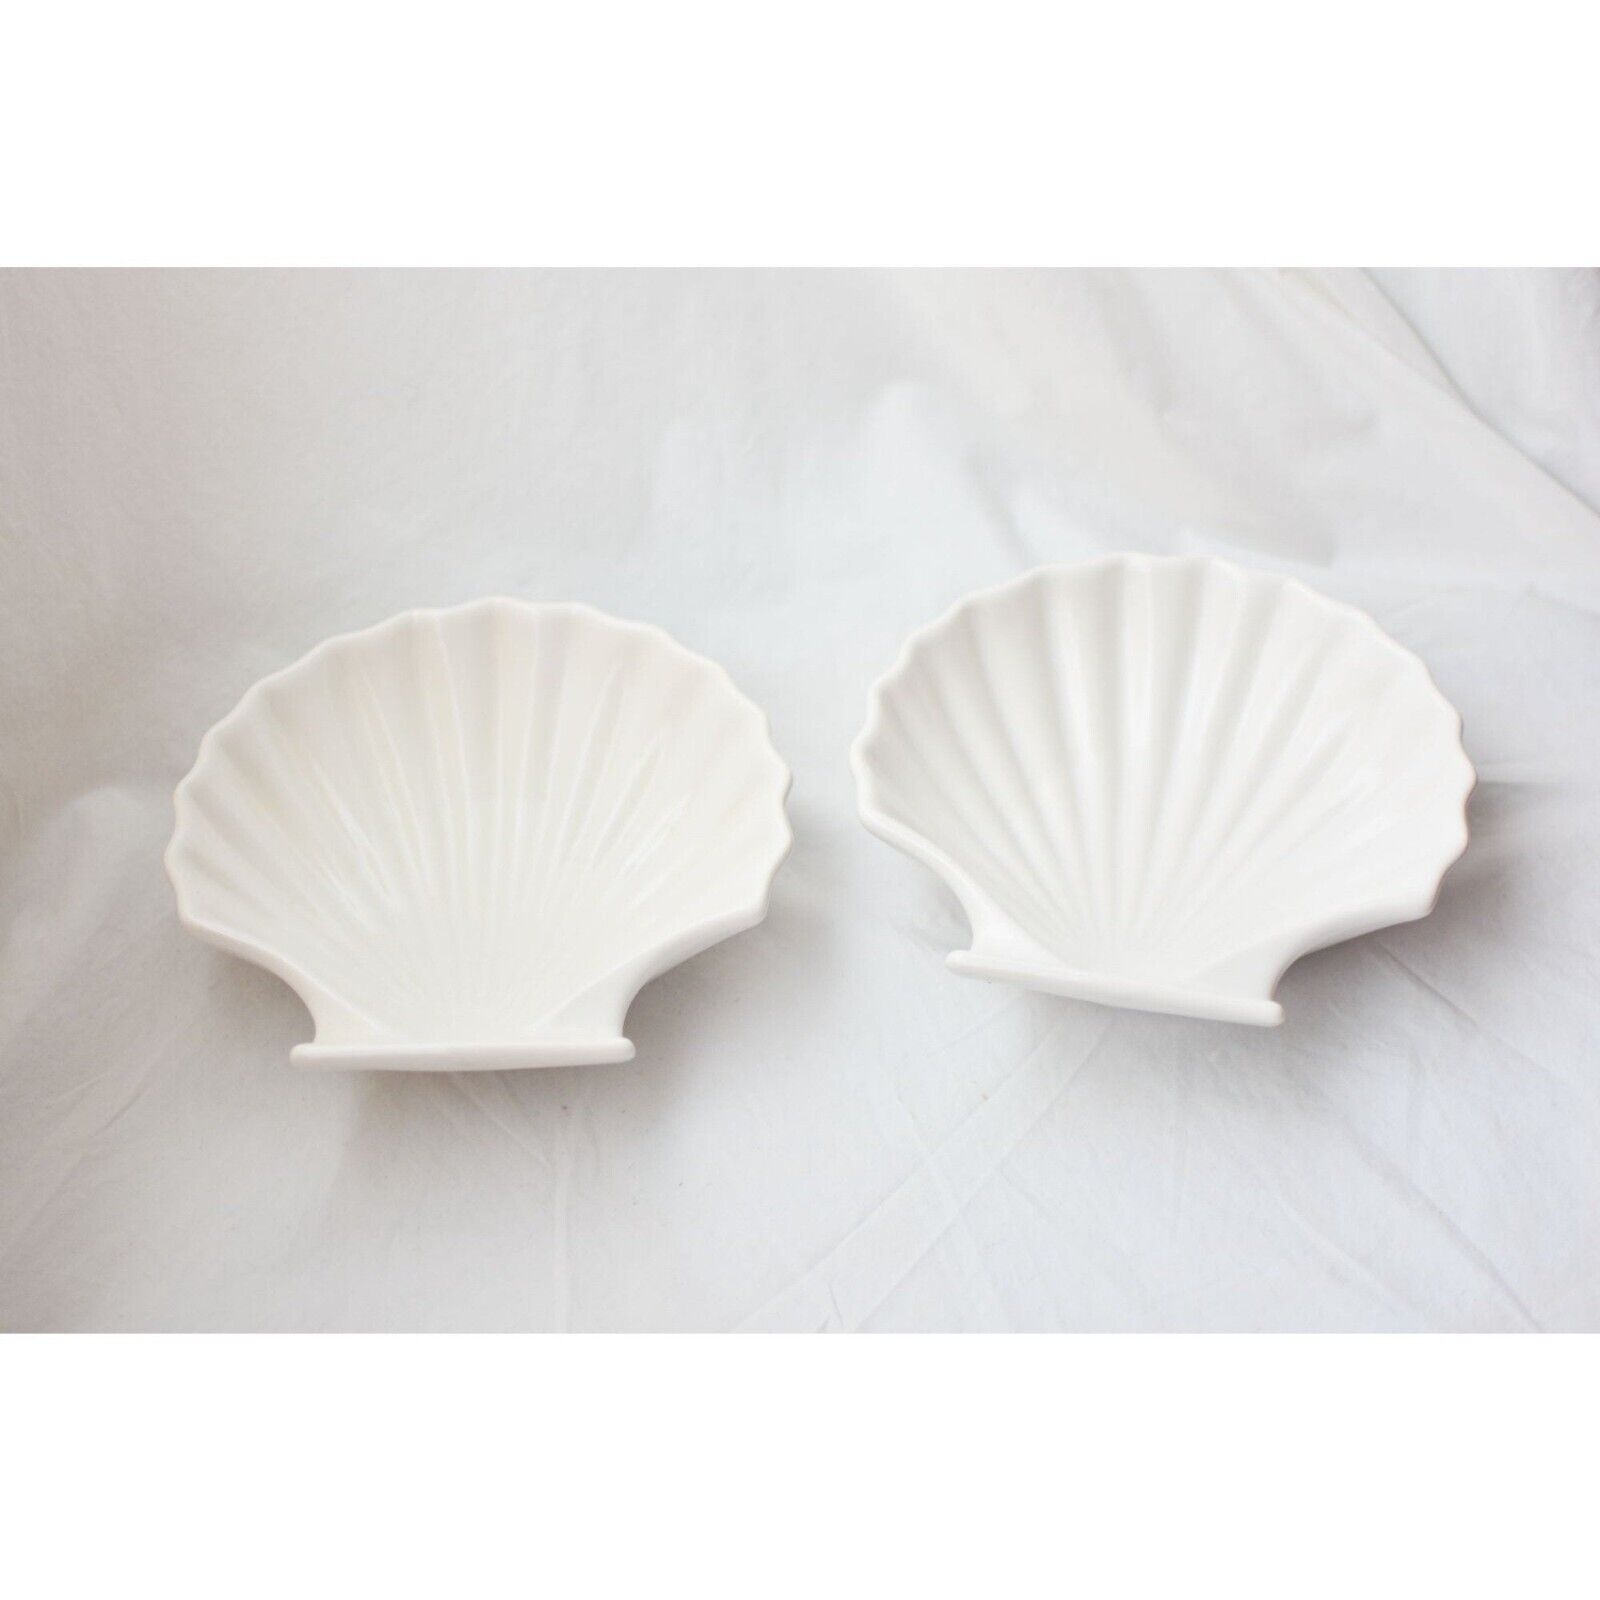 Vintage shell ash tray white romantic dreamy beach home decor jewelry tray